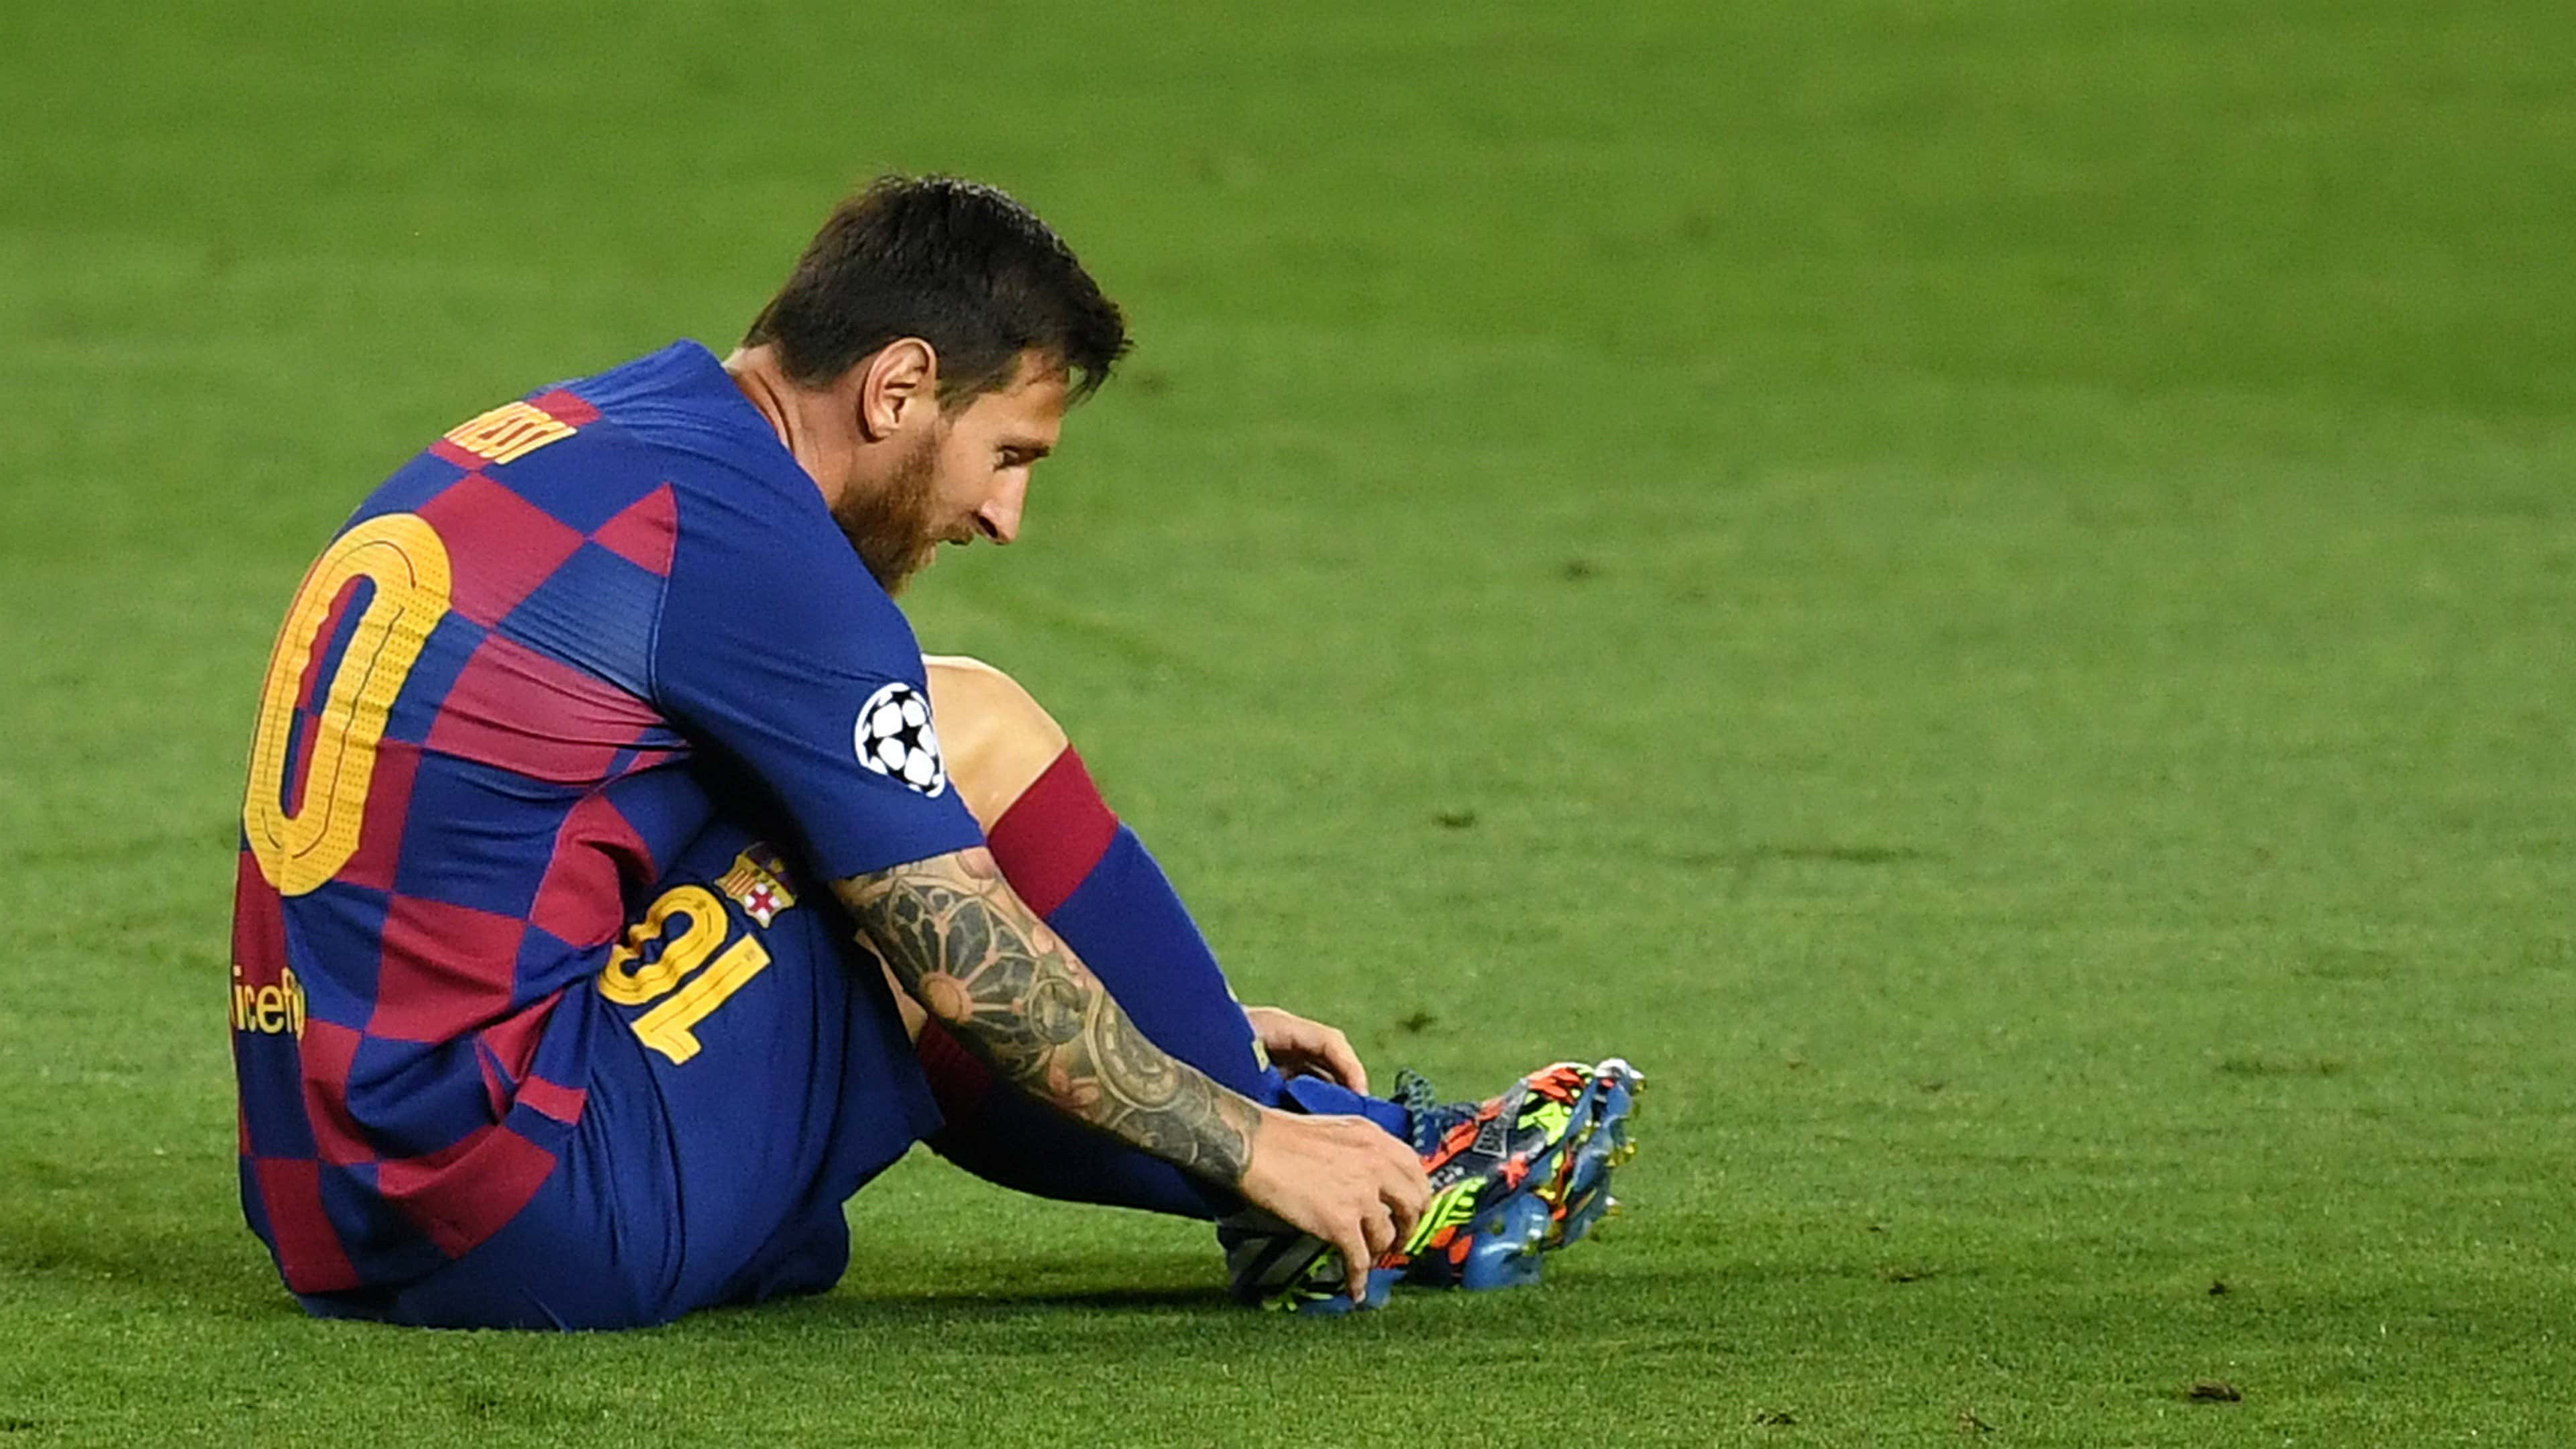 botines usa Messi: marca, color precio de las botas de Pulga? | Goal.com Espana